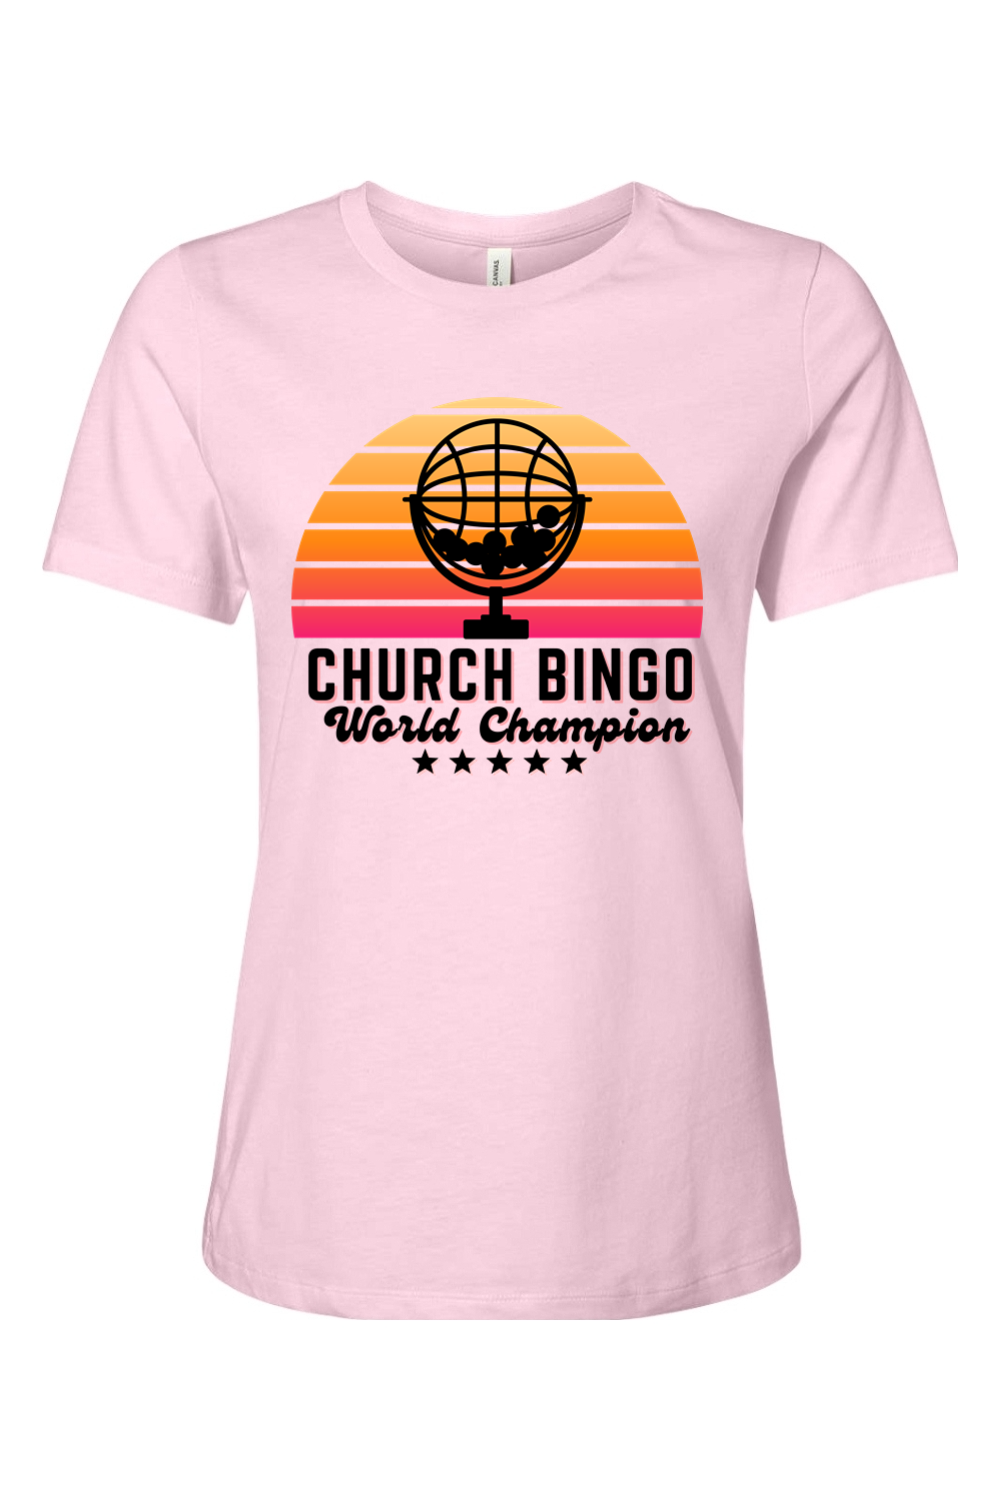 Church Bingo World Champion - Ladies Tee - Yinzylvania